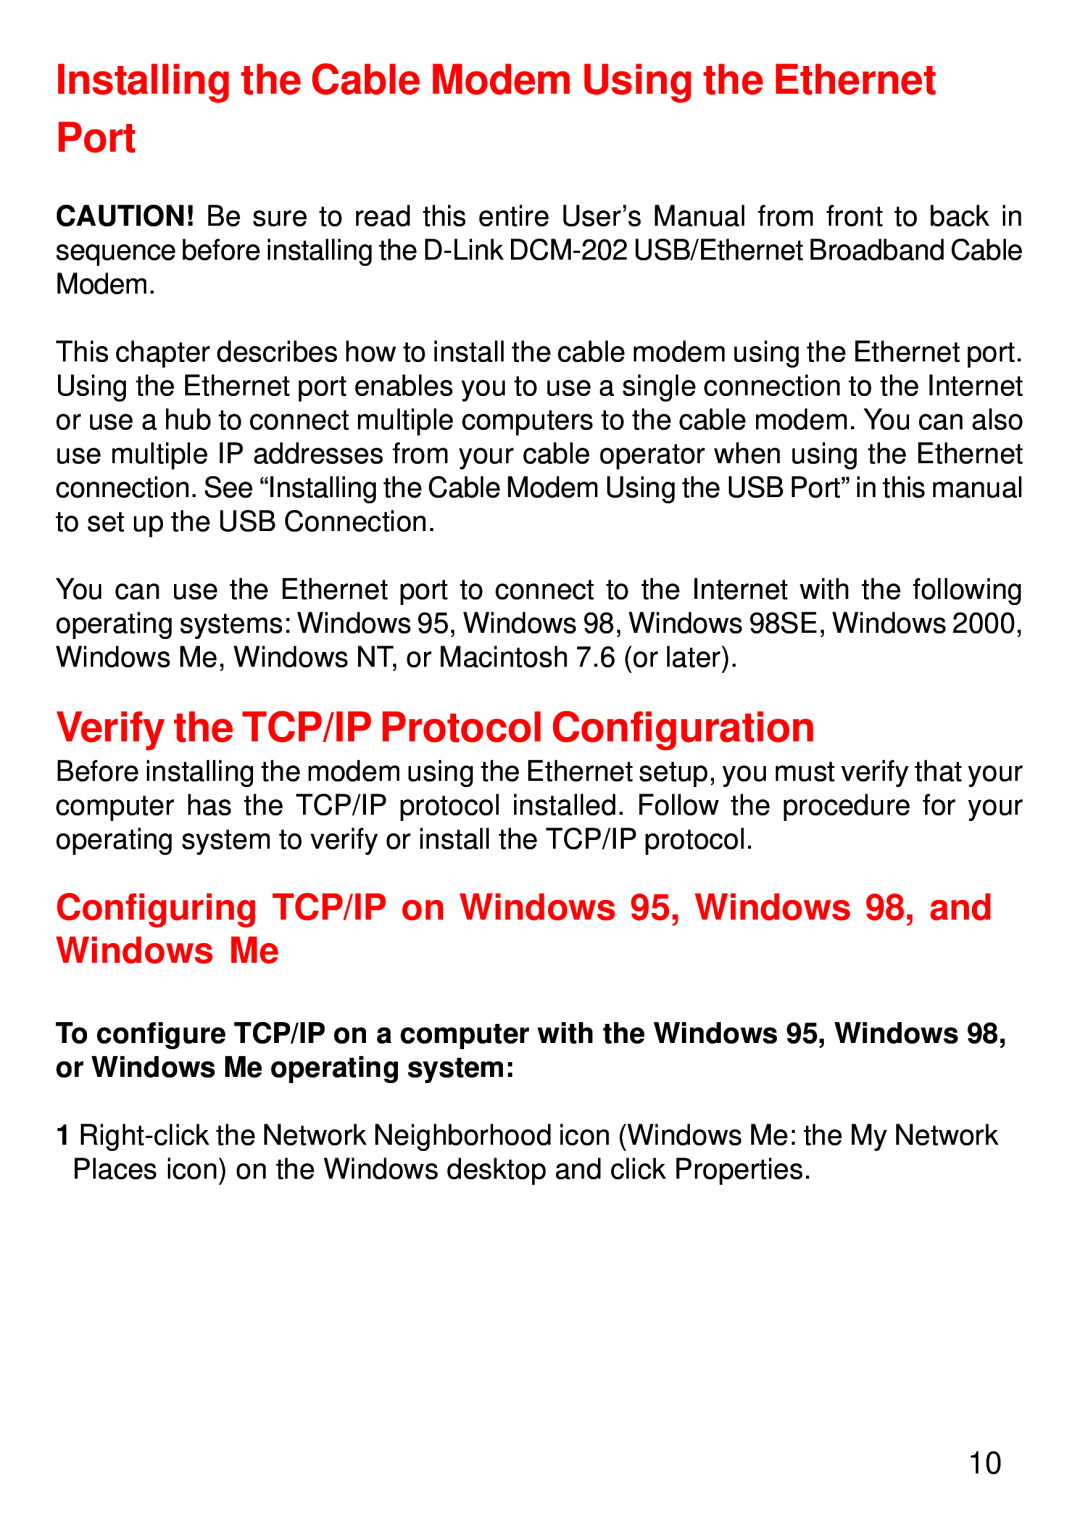 D-Link DCM-202 Verify the TCP/IP Protocol Configuration, Configuring TCP/IP on Windows 95, Windows 98, and Windows Me 